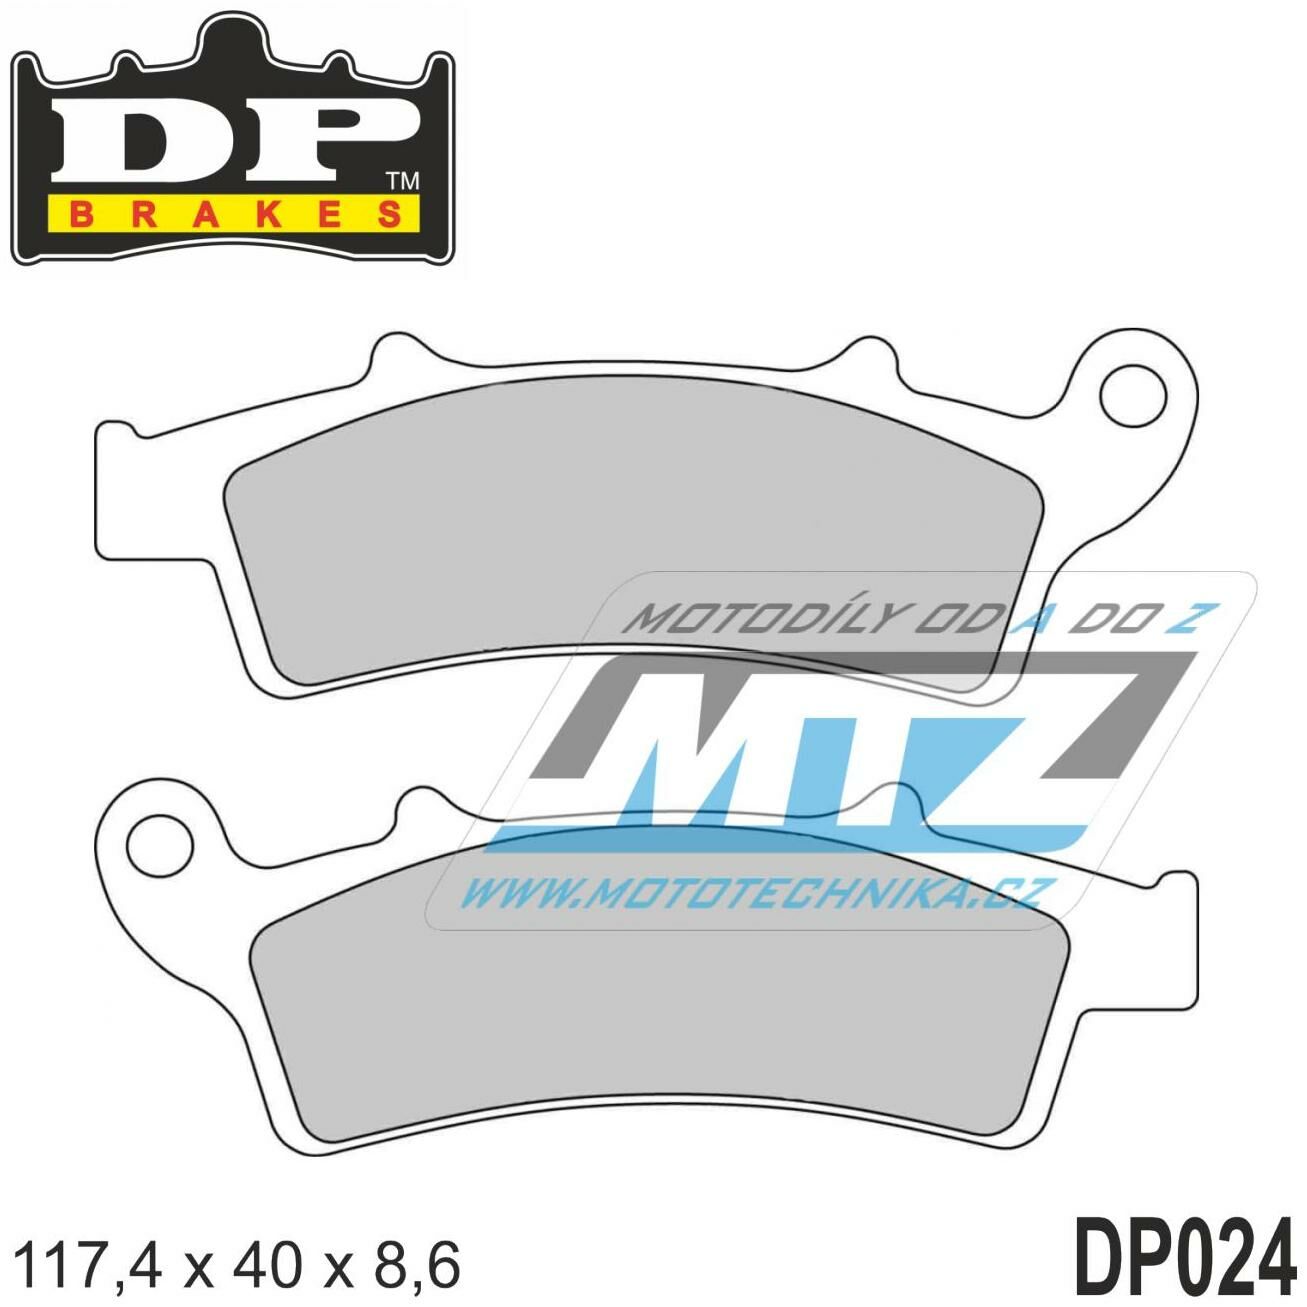 Obrázek produktu Destičky brzdové DP024 DP Brakes - směs Premium OEM Sinter DP024